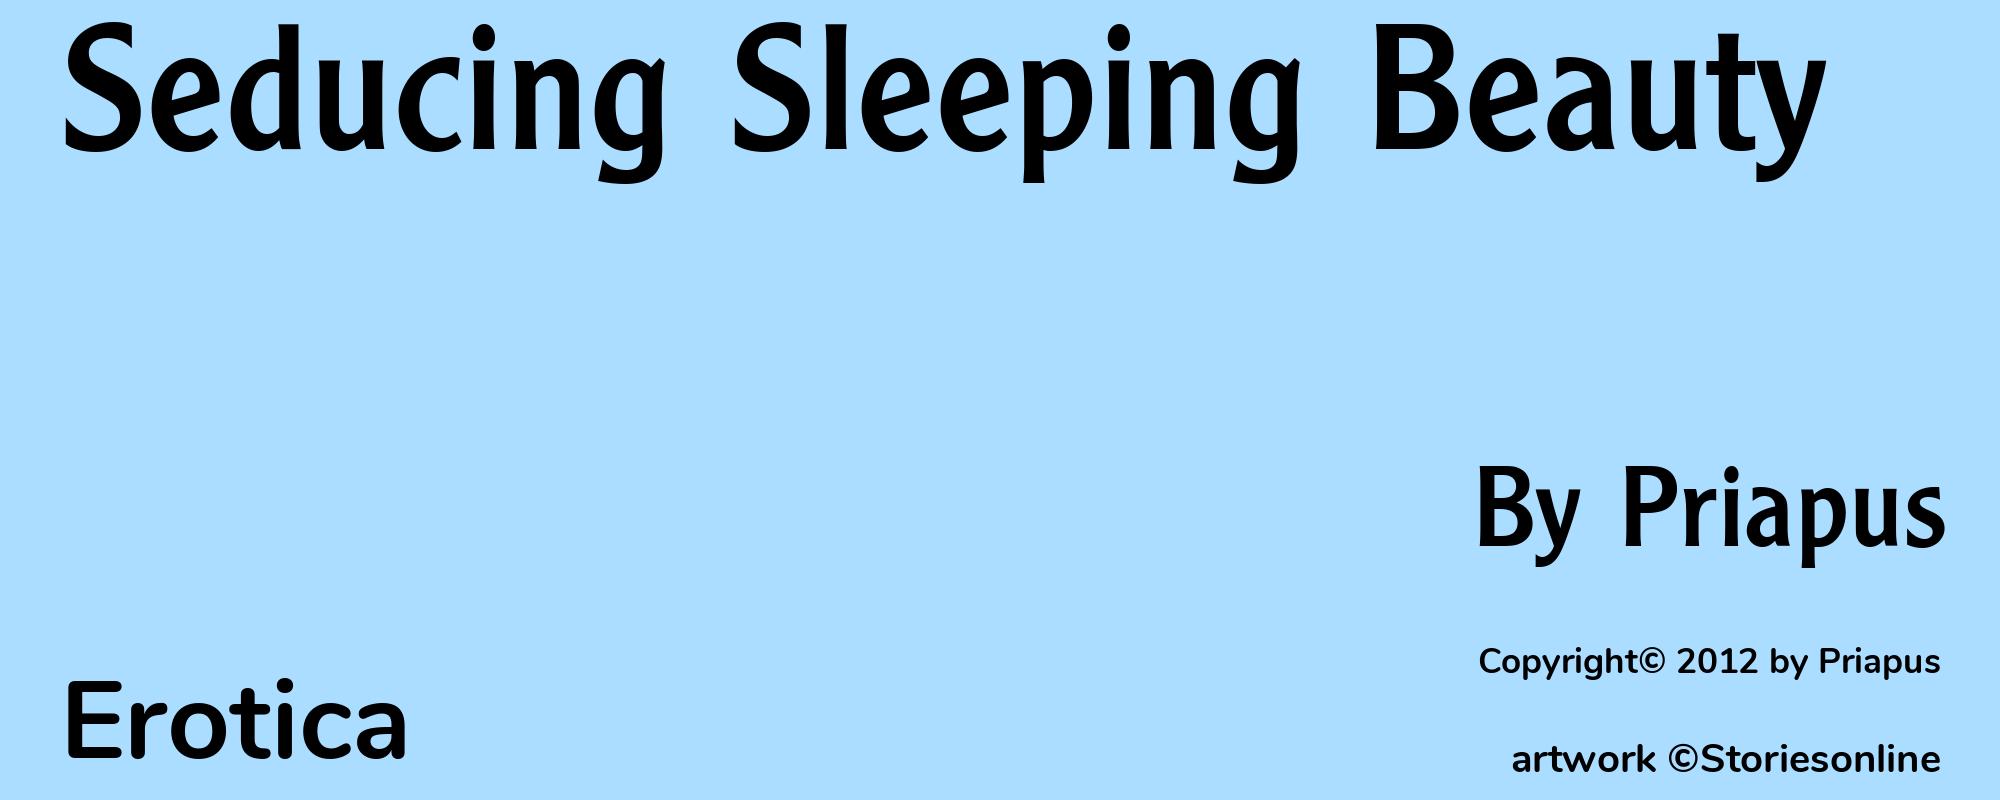 Seducing Sleeping Beauty - Cover